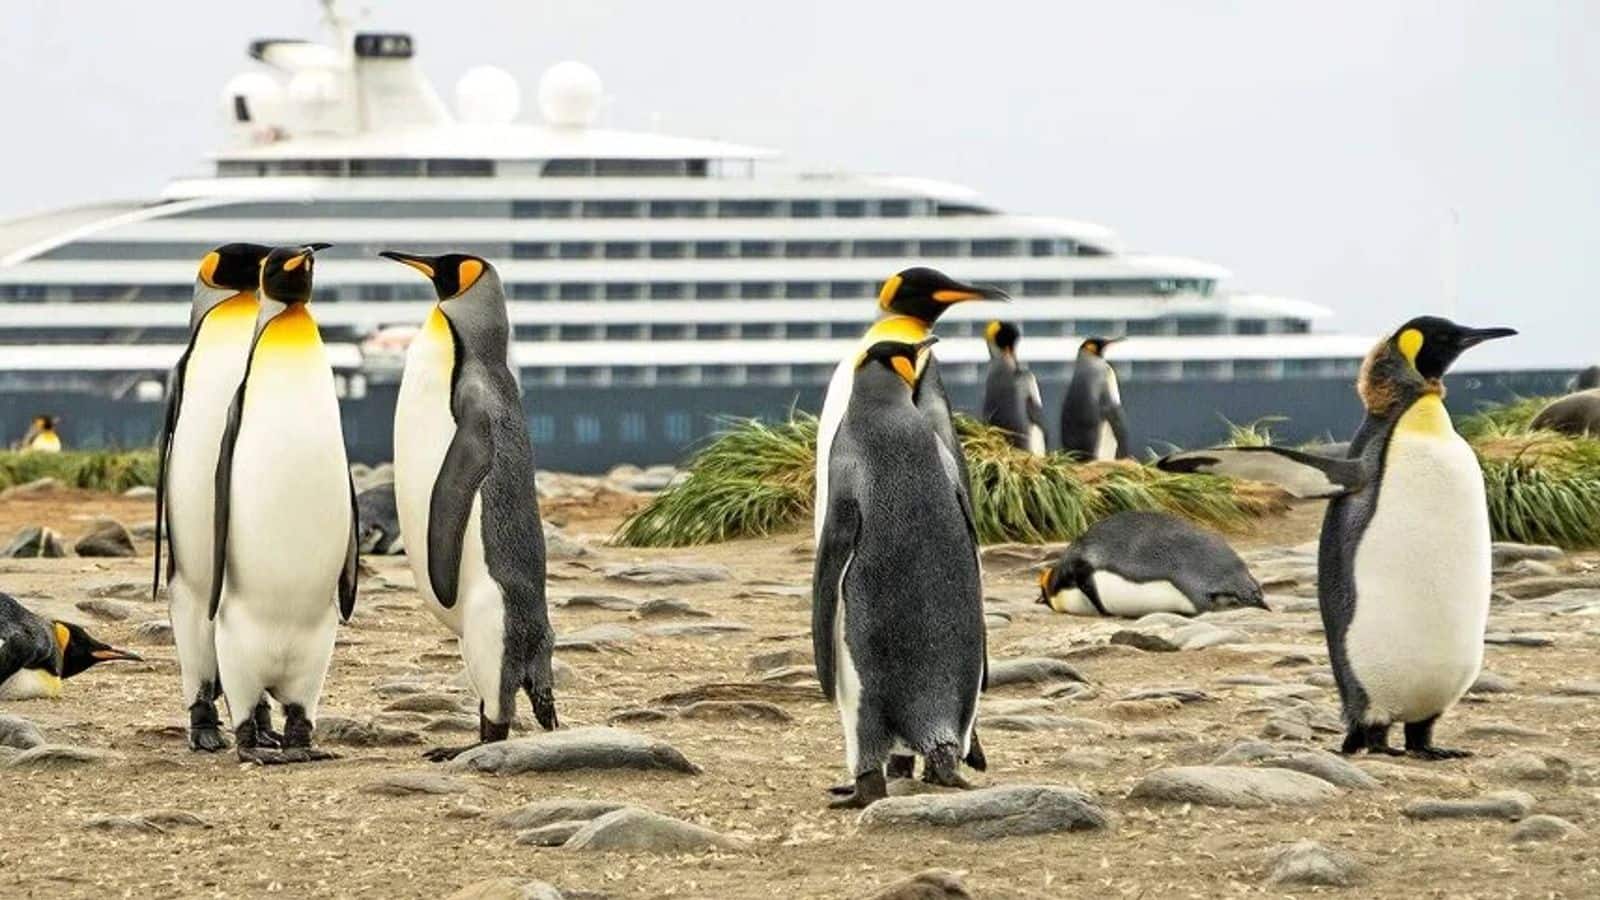 Antarctic expedition cruise: Encounter emperor penguins